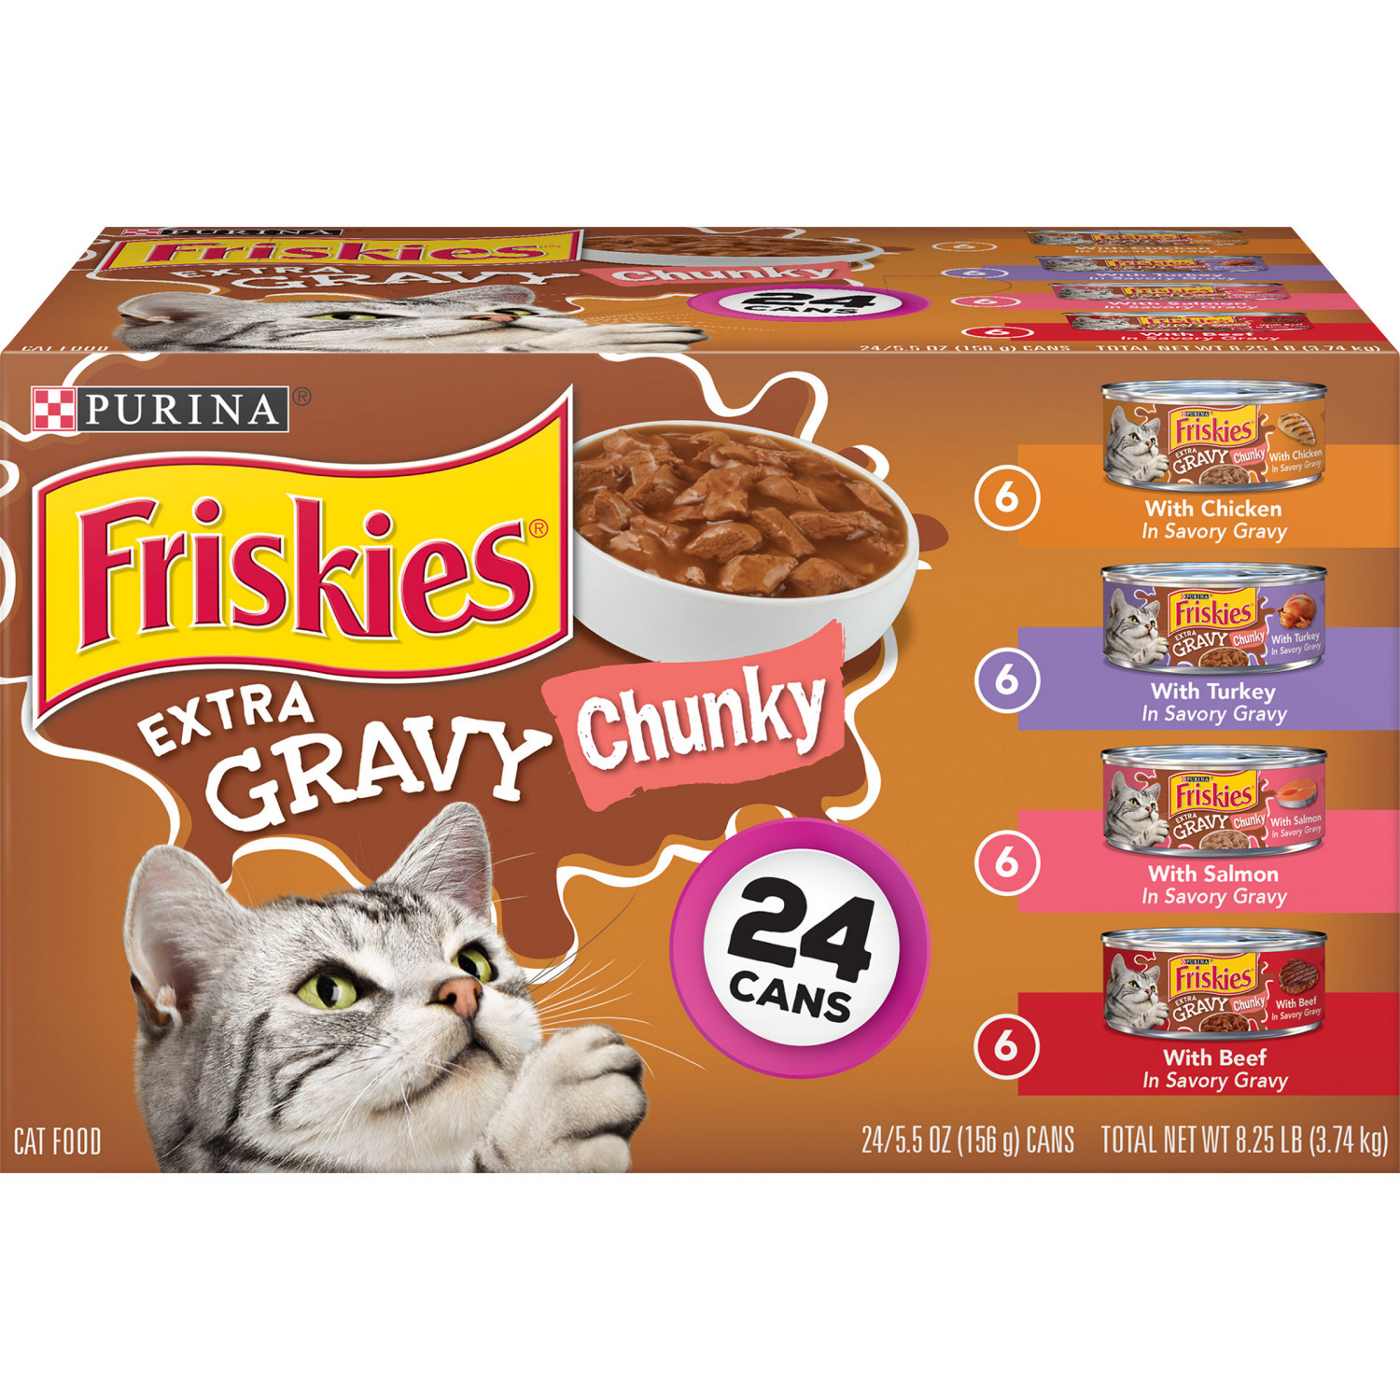 Friskies Purina Friskies Gravy Wet Cat Food Variety Pack, Extra Gravy Chunky; image 1 of 8